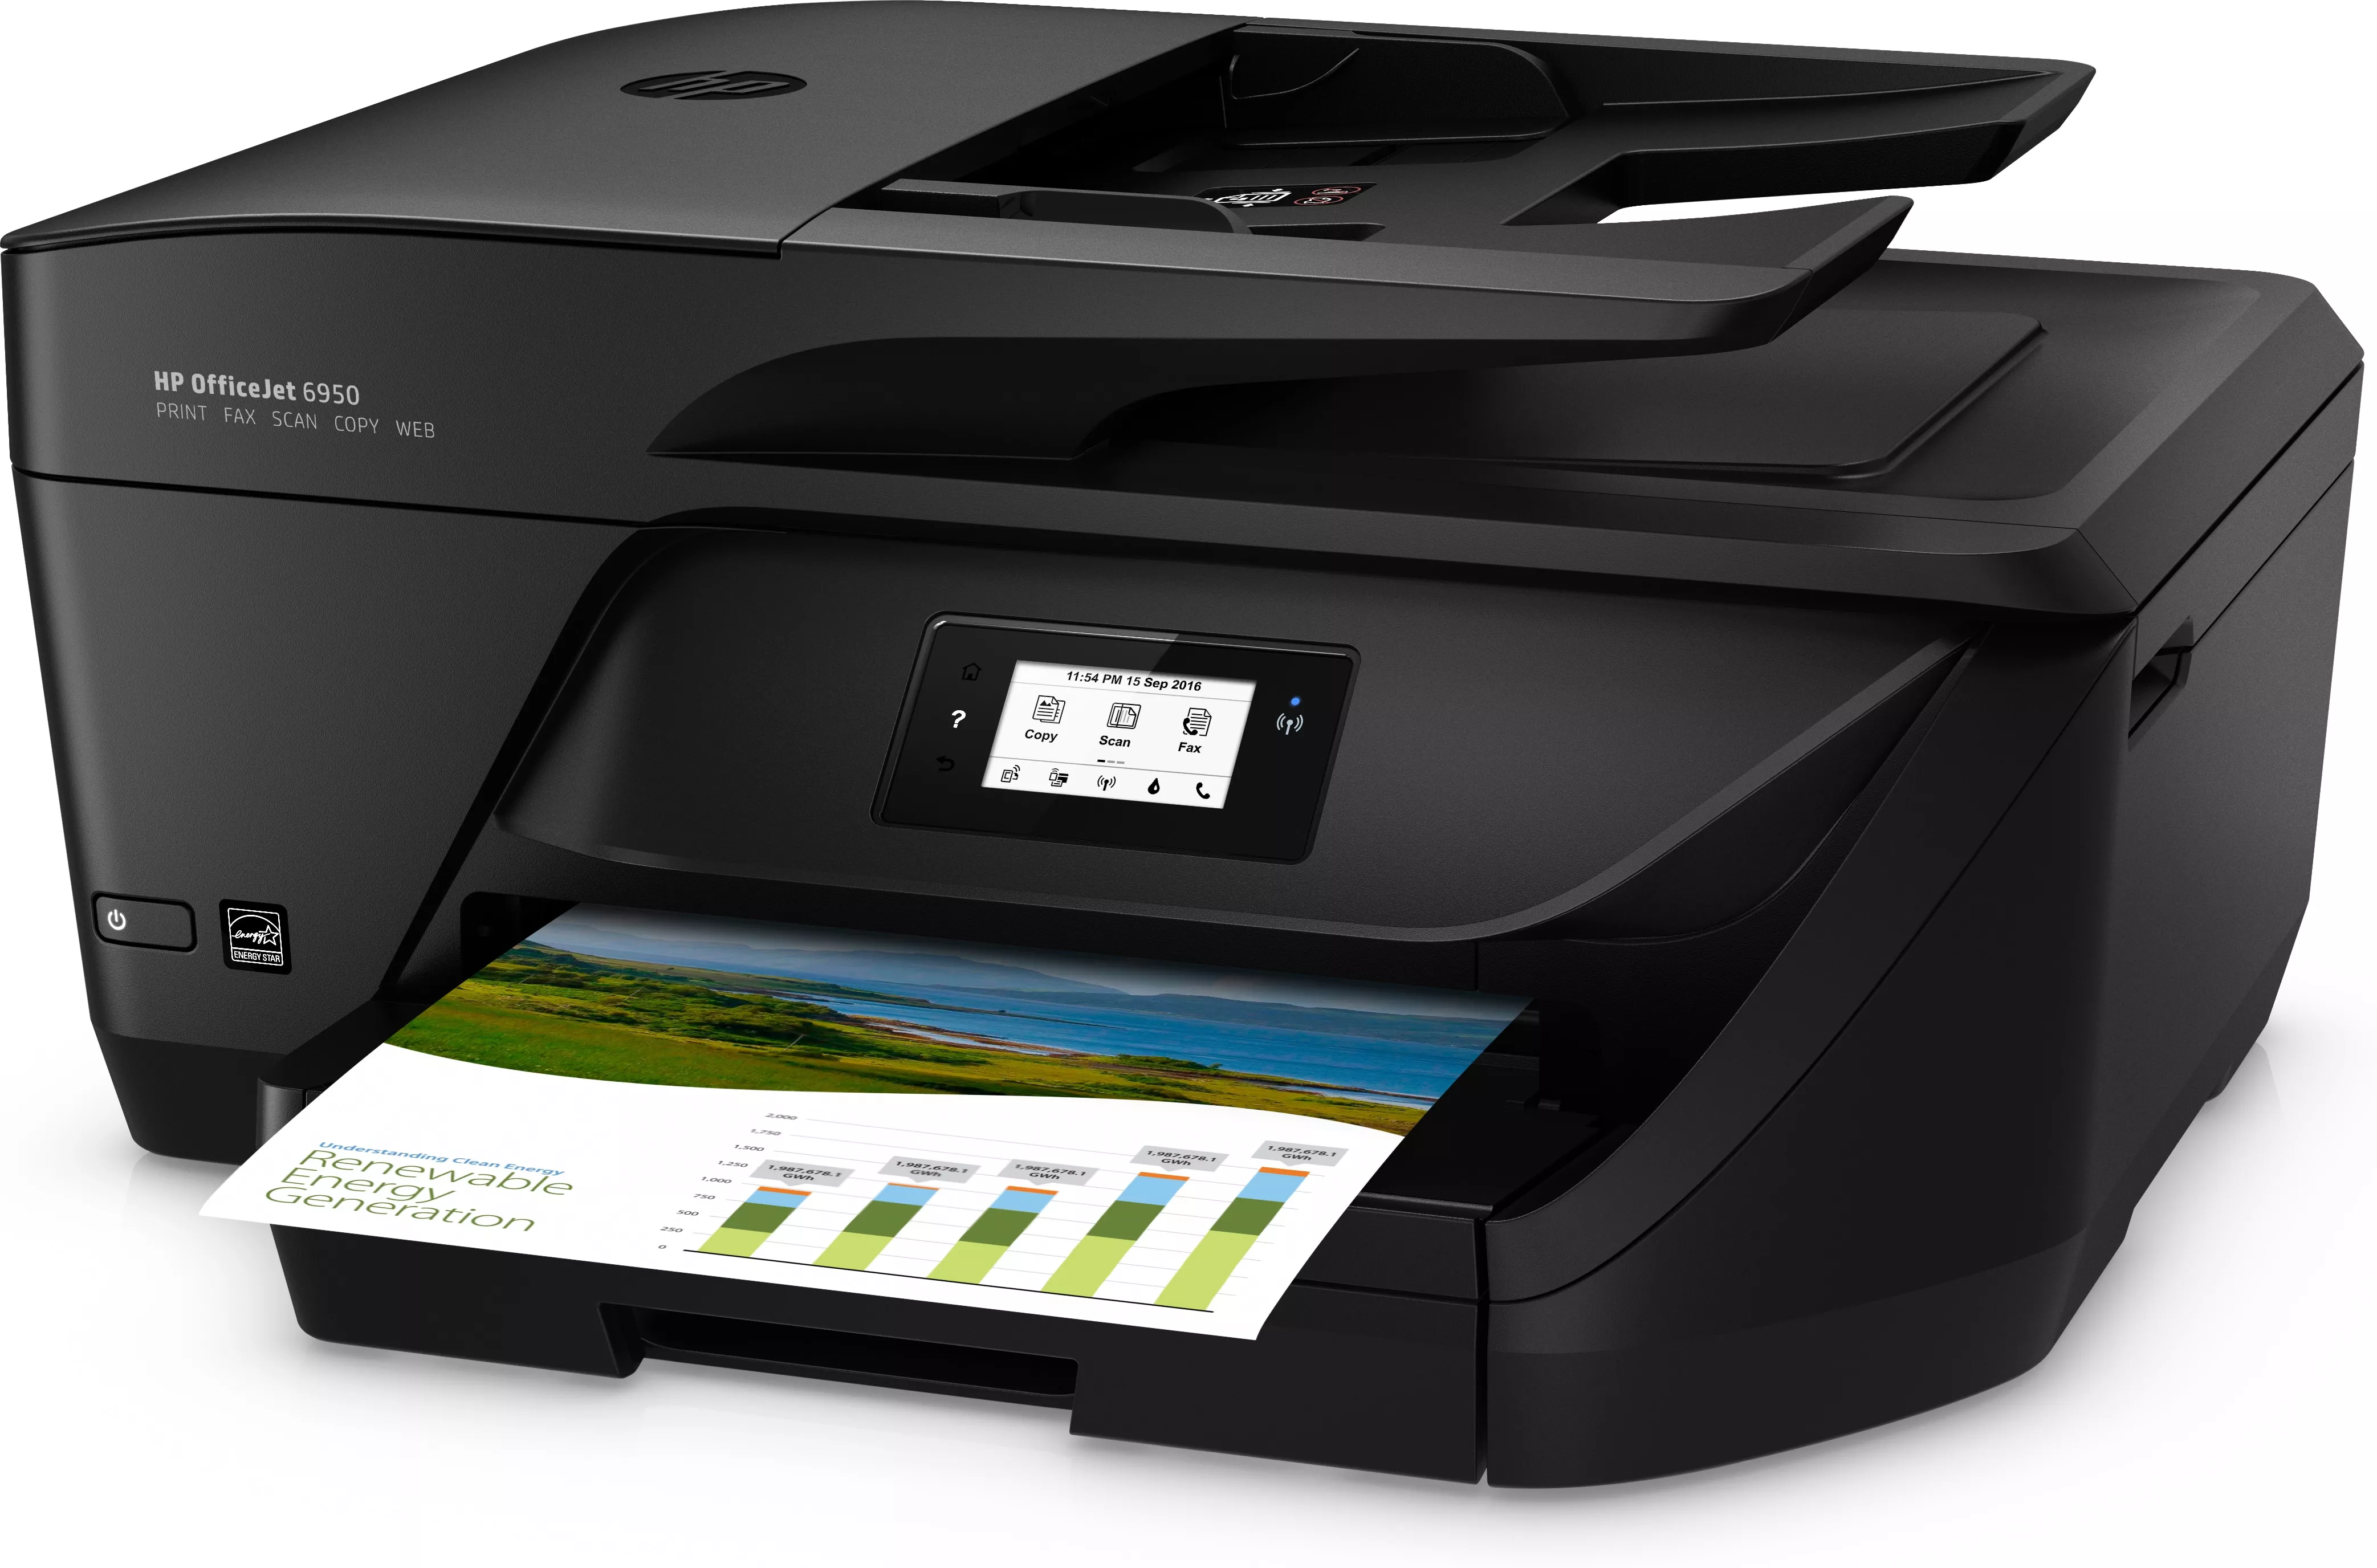 Vente HP OfficeJet 6950 e-All-in-One Printer HP au meilleur prix - visuel 2